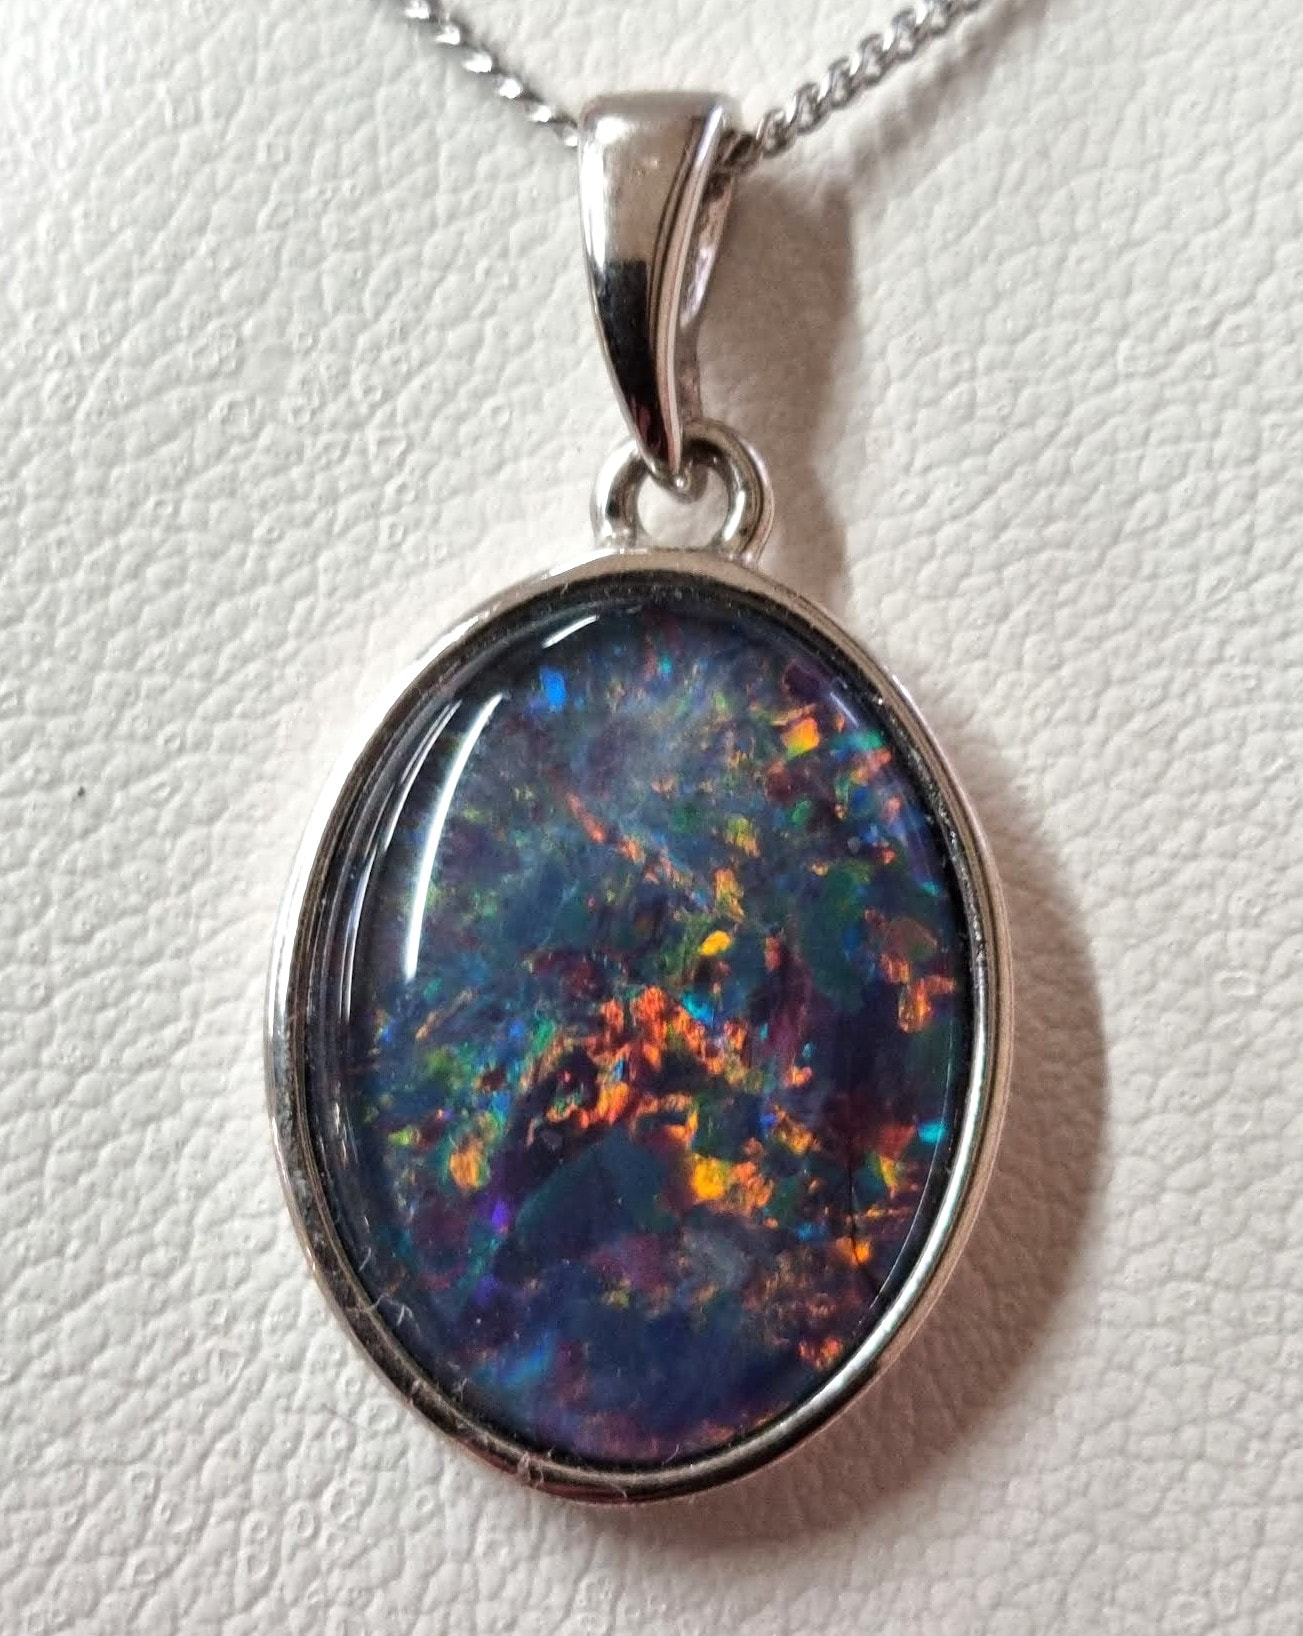 16x12mm oval gem quality opal triplet pendant in sterling silver